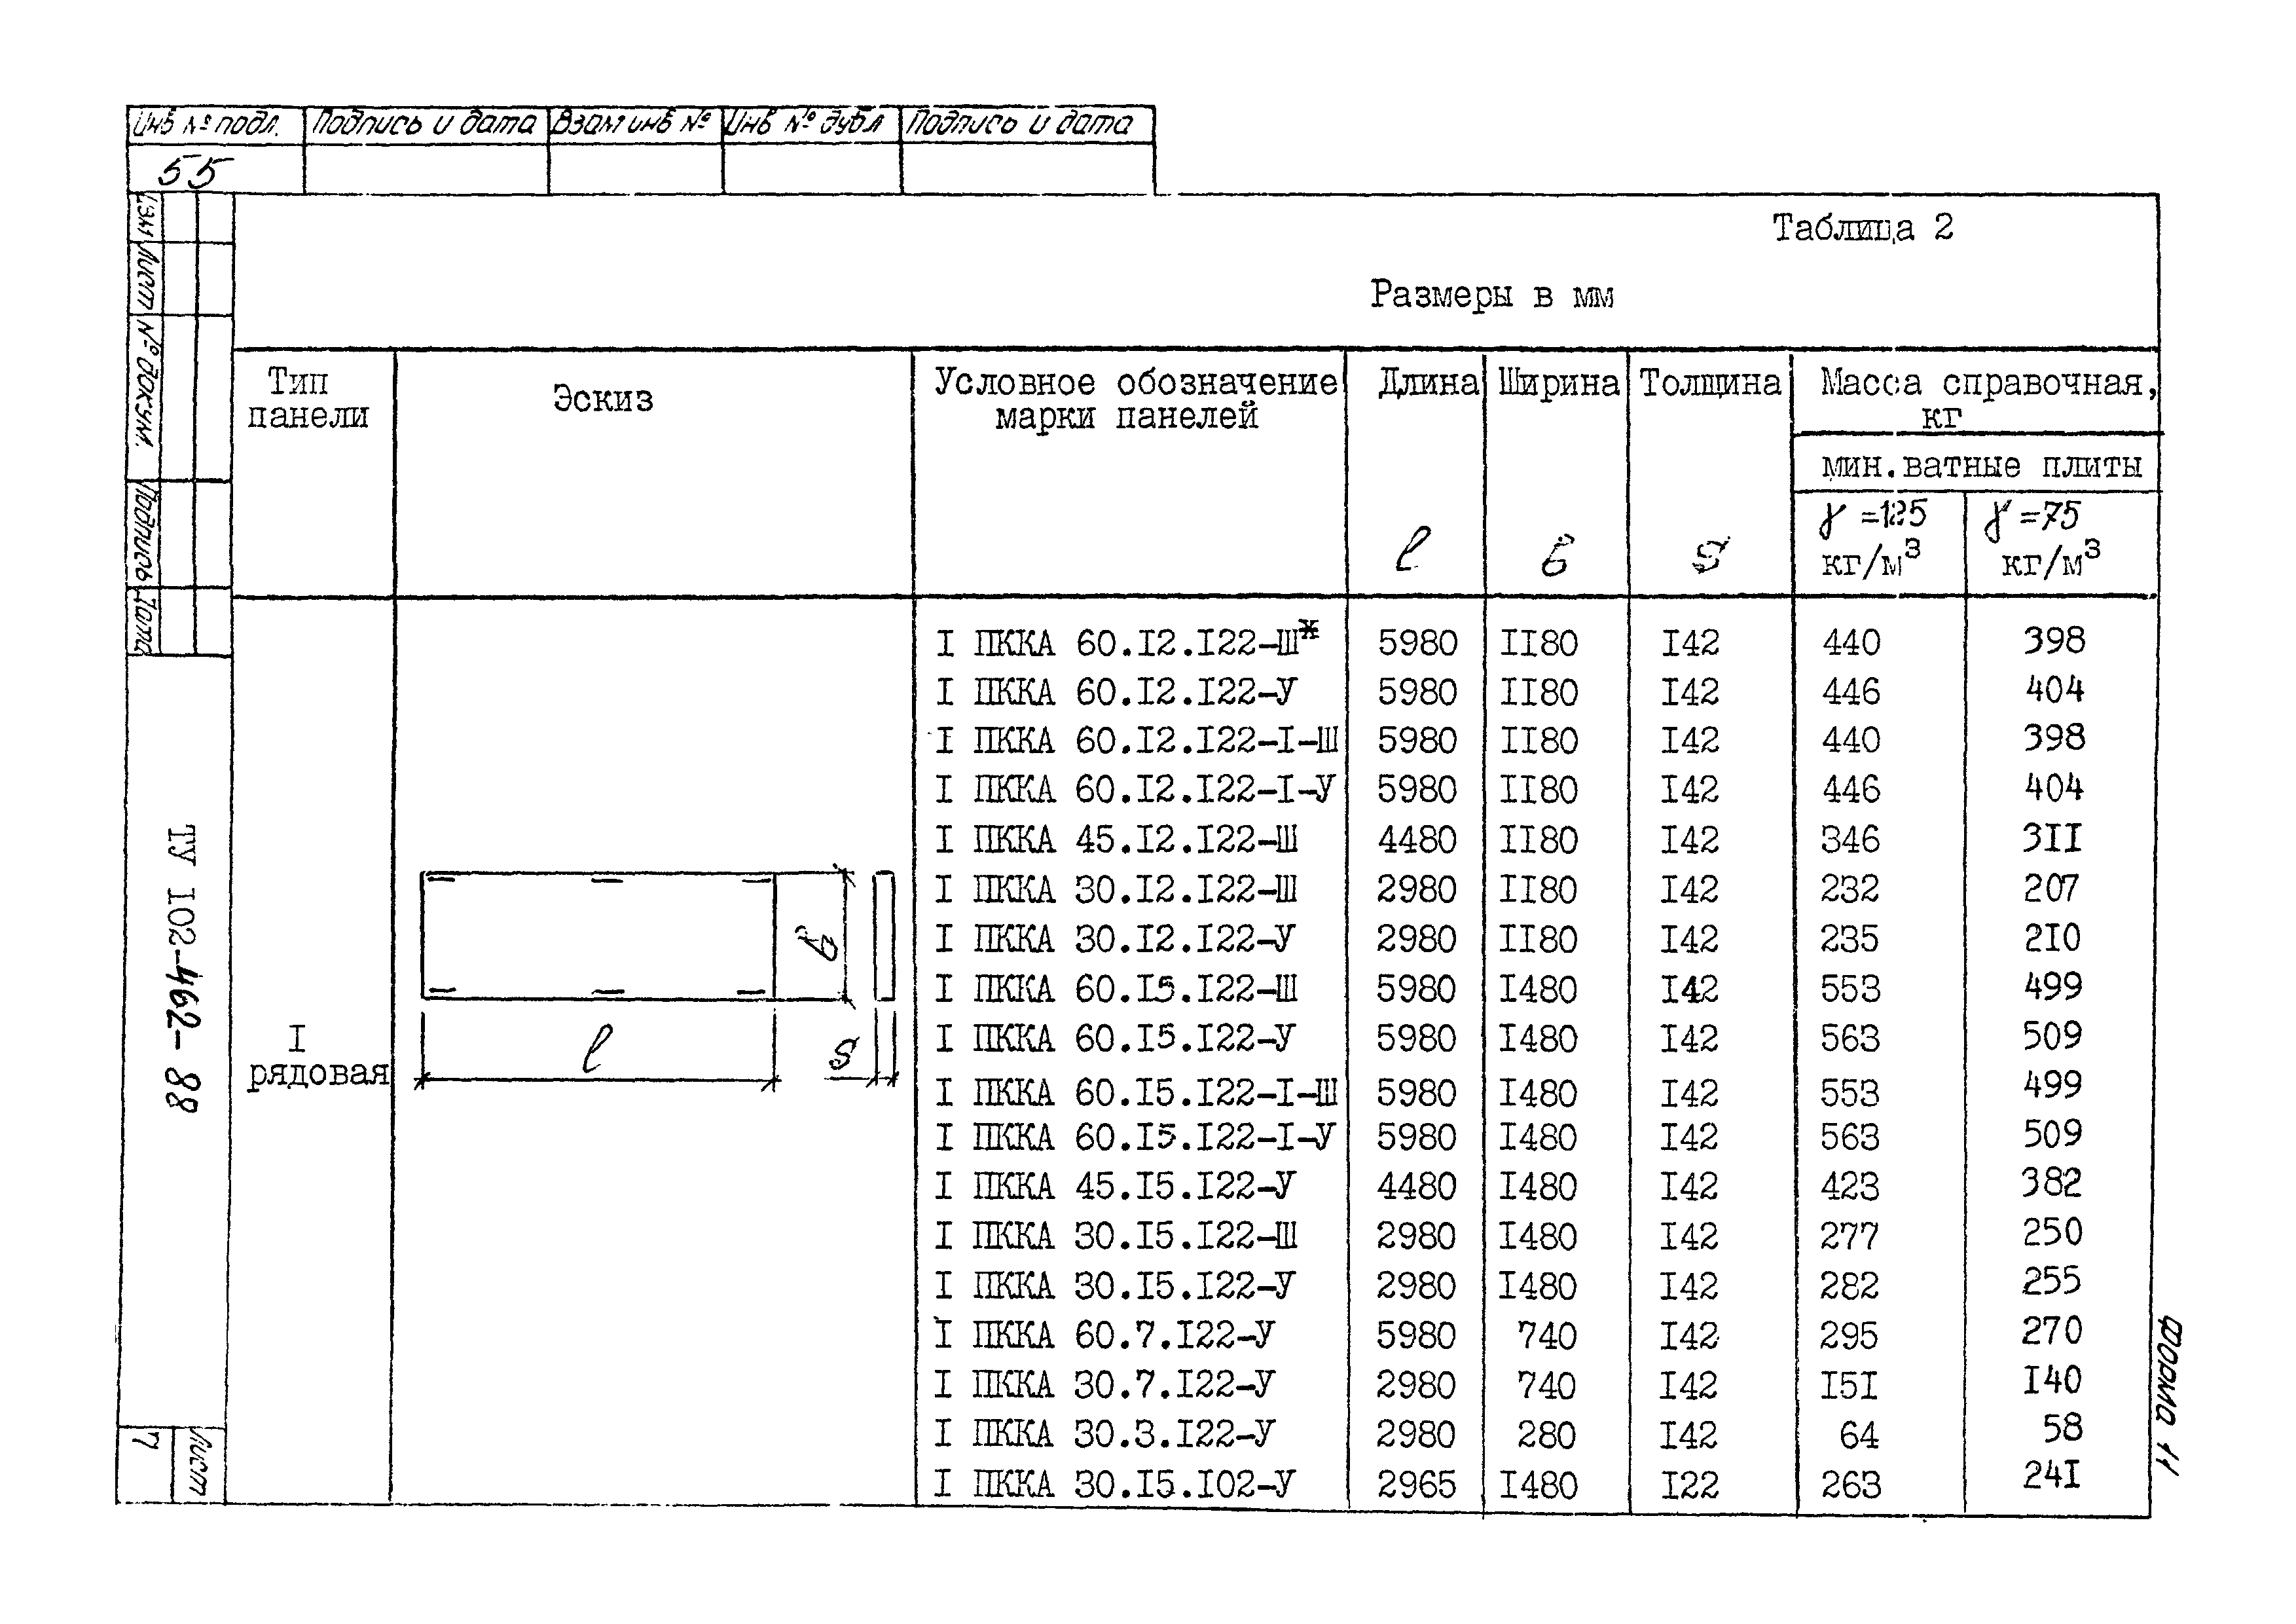 ТУ 102-462-88